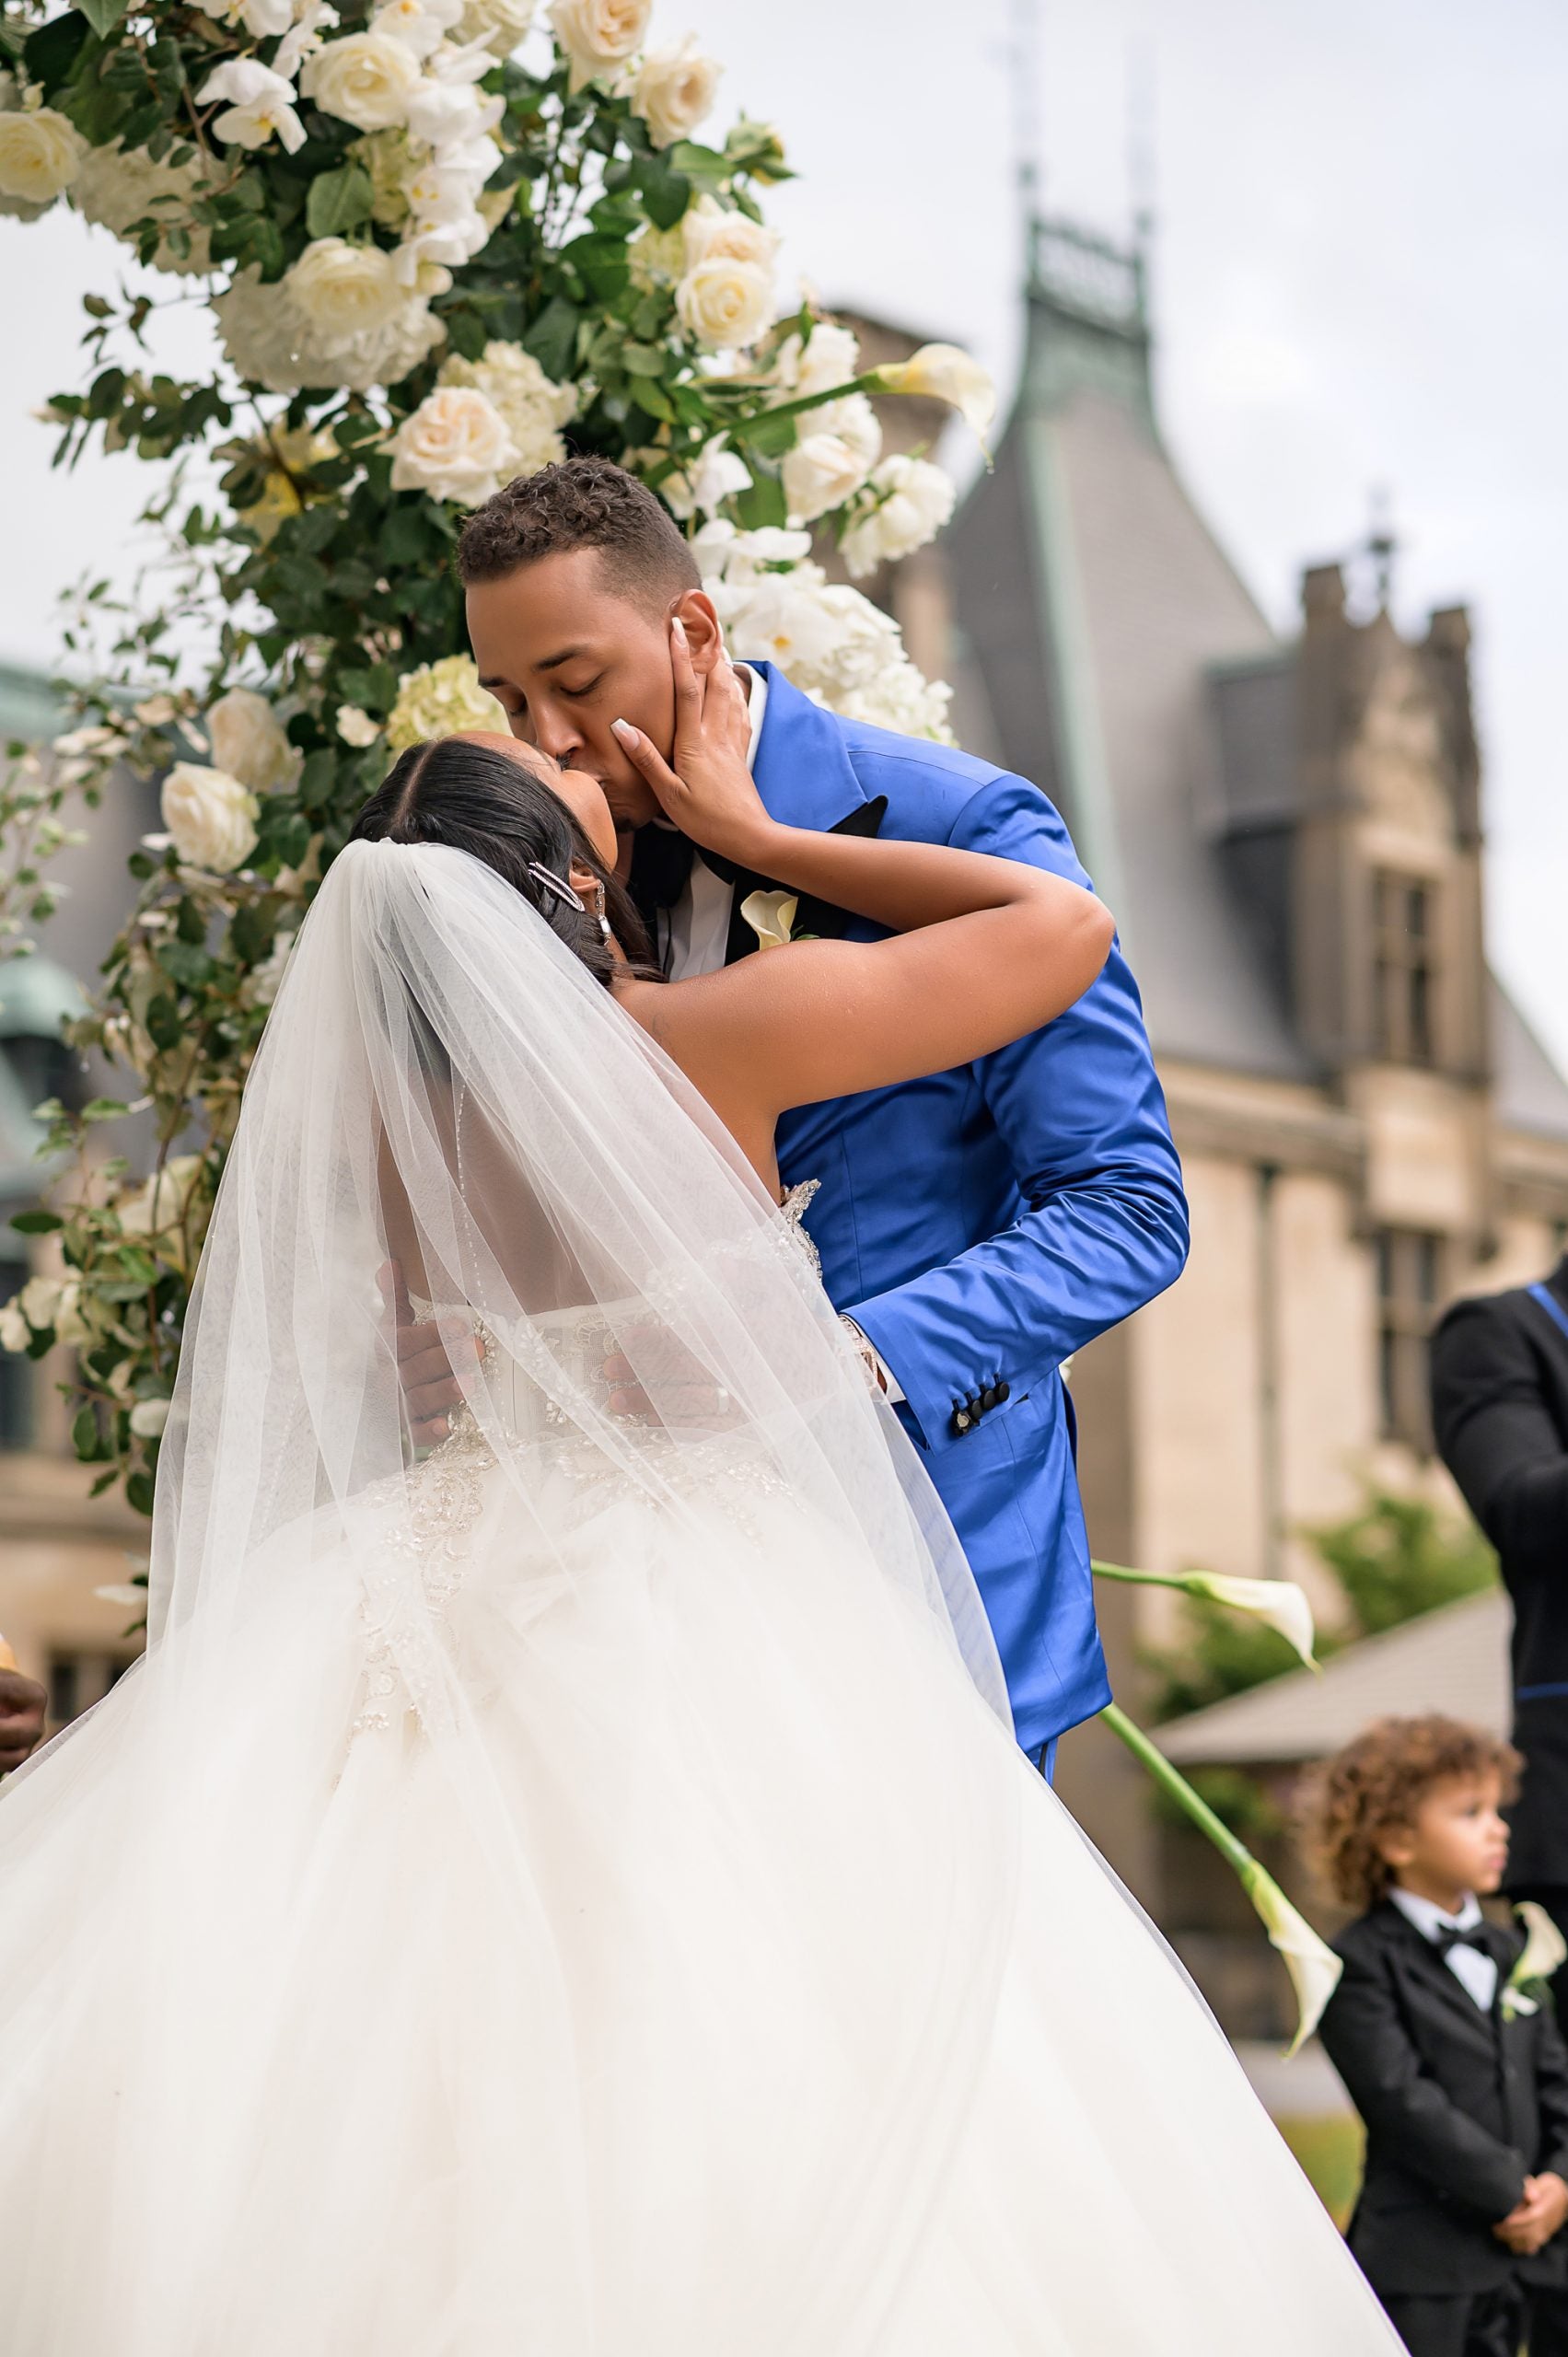 Exclusive: Inside Jasmine Luv and Corey Barrett's Fairytale Wedding Day